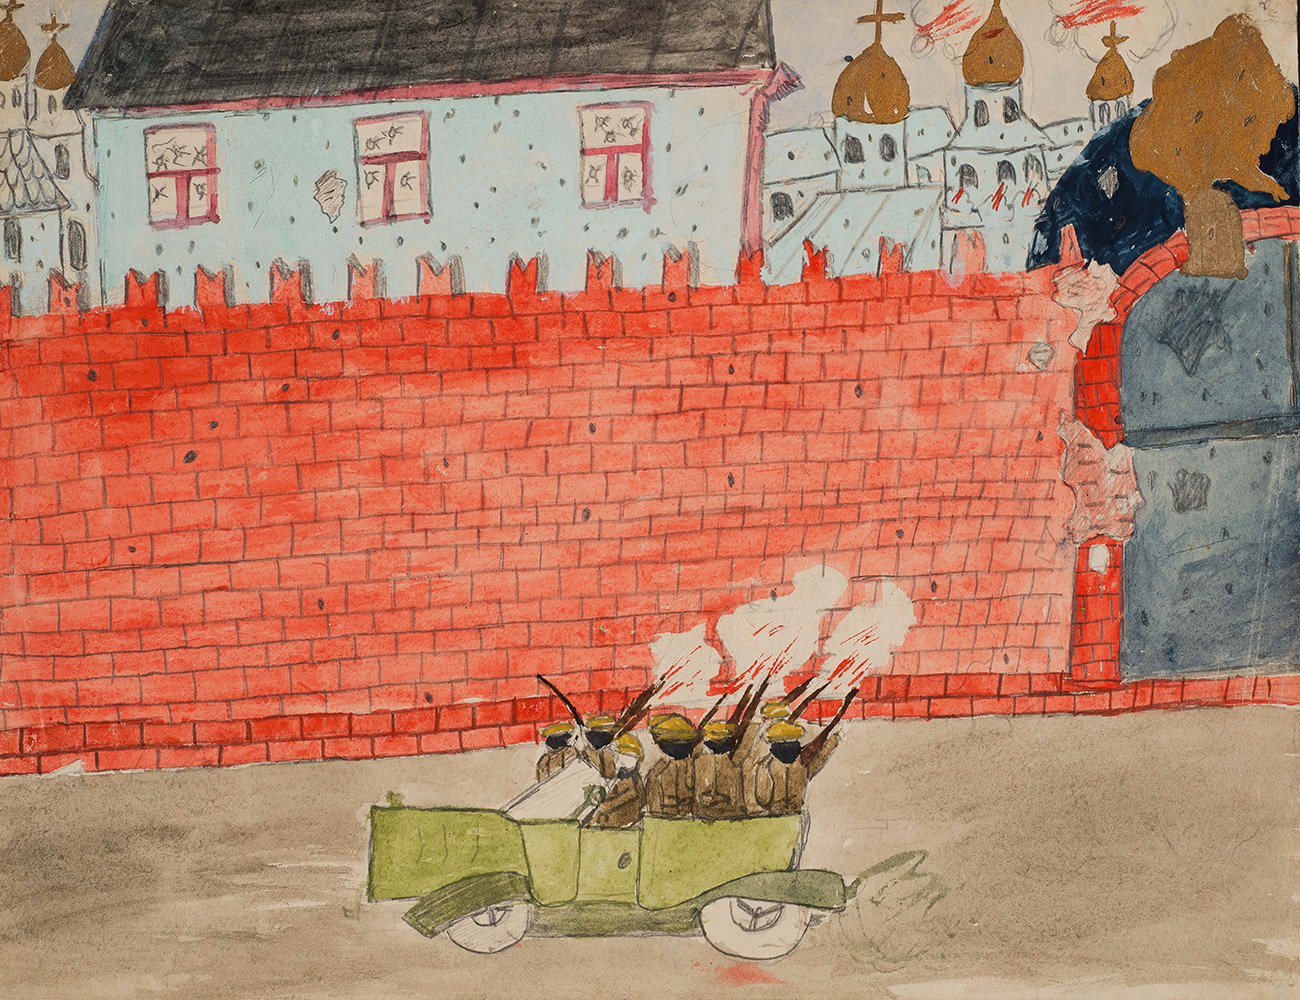 “Shelling of the Kremlin”, Moscow, October-November 1917